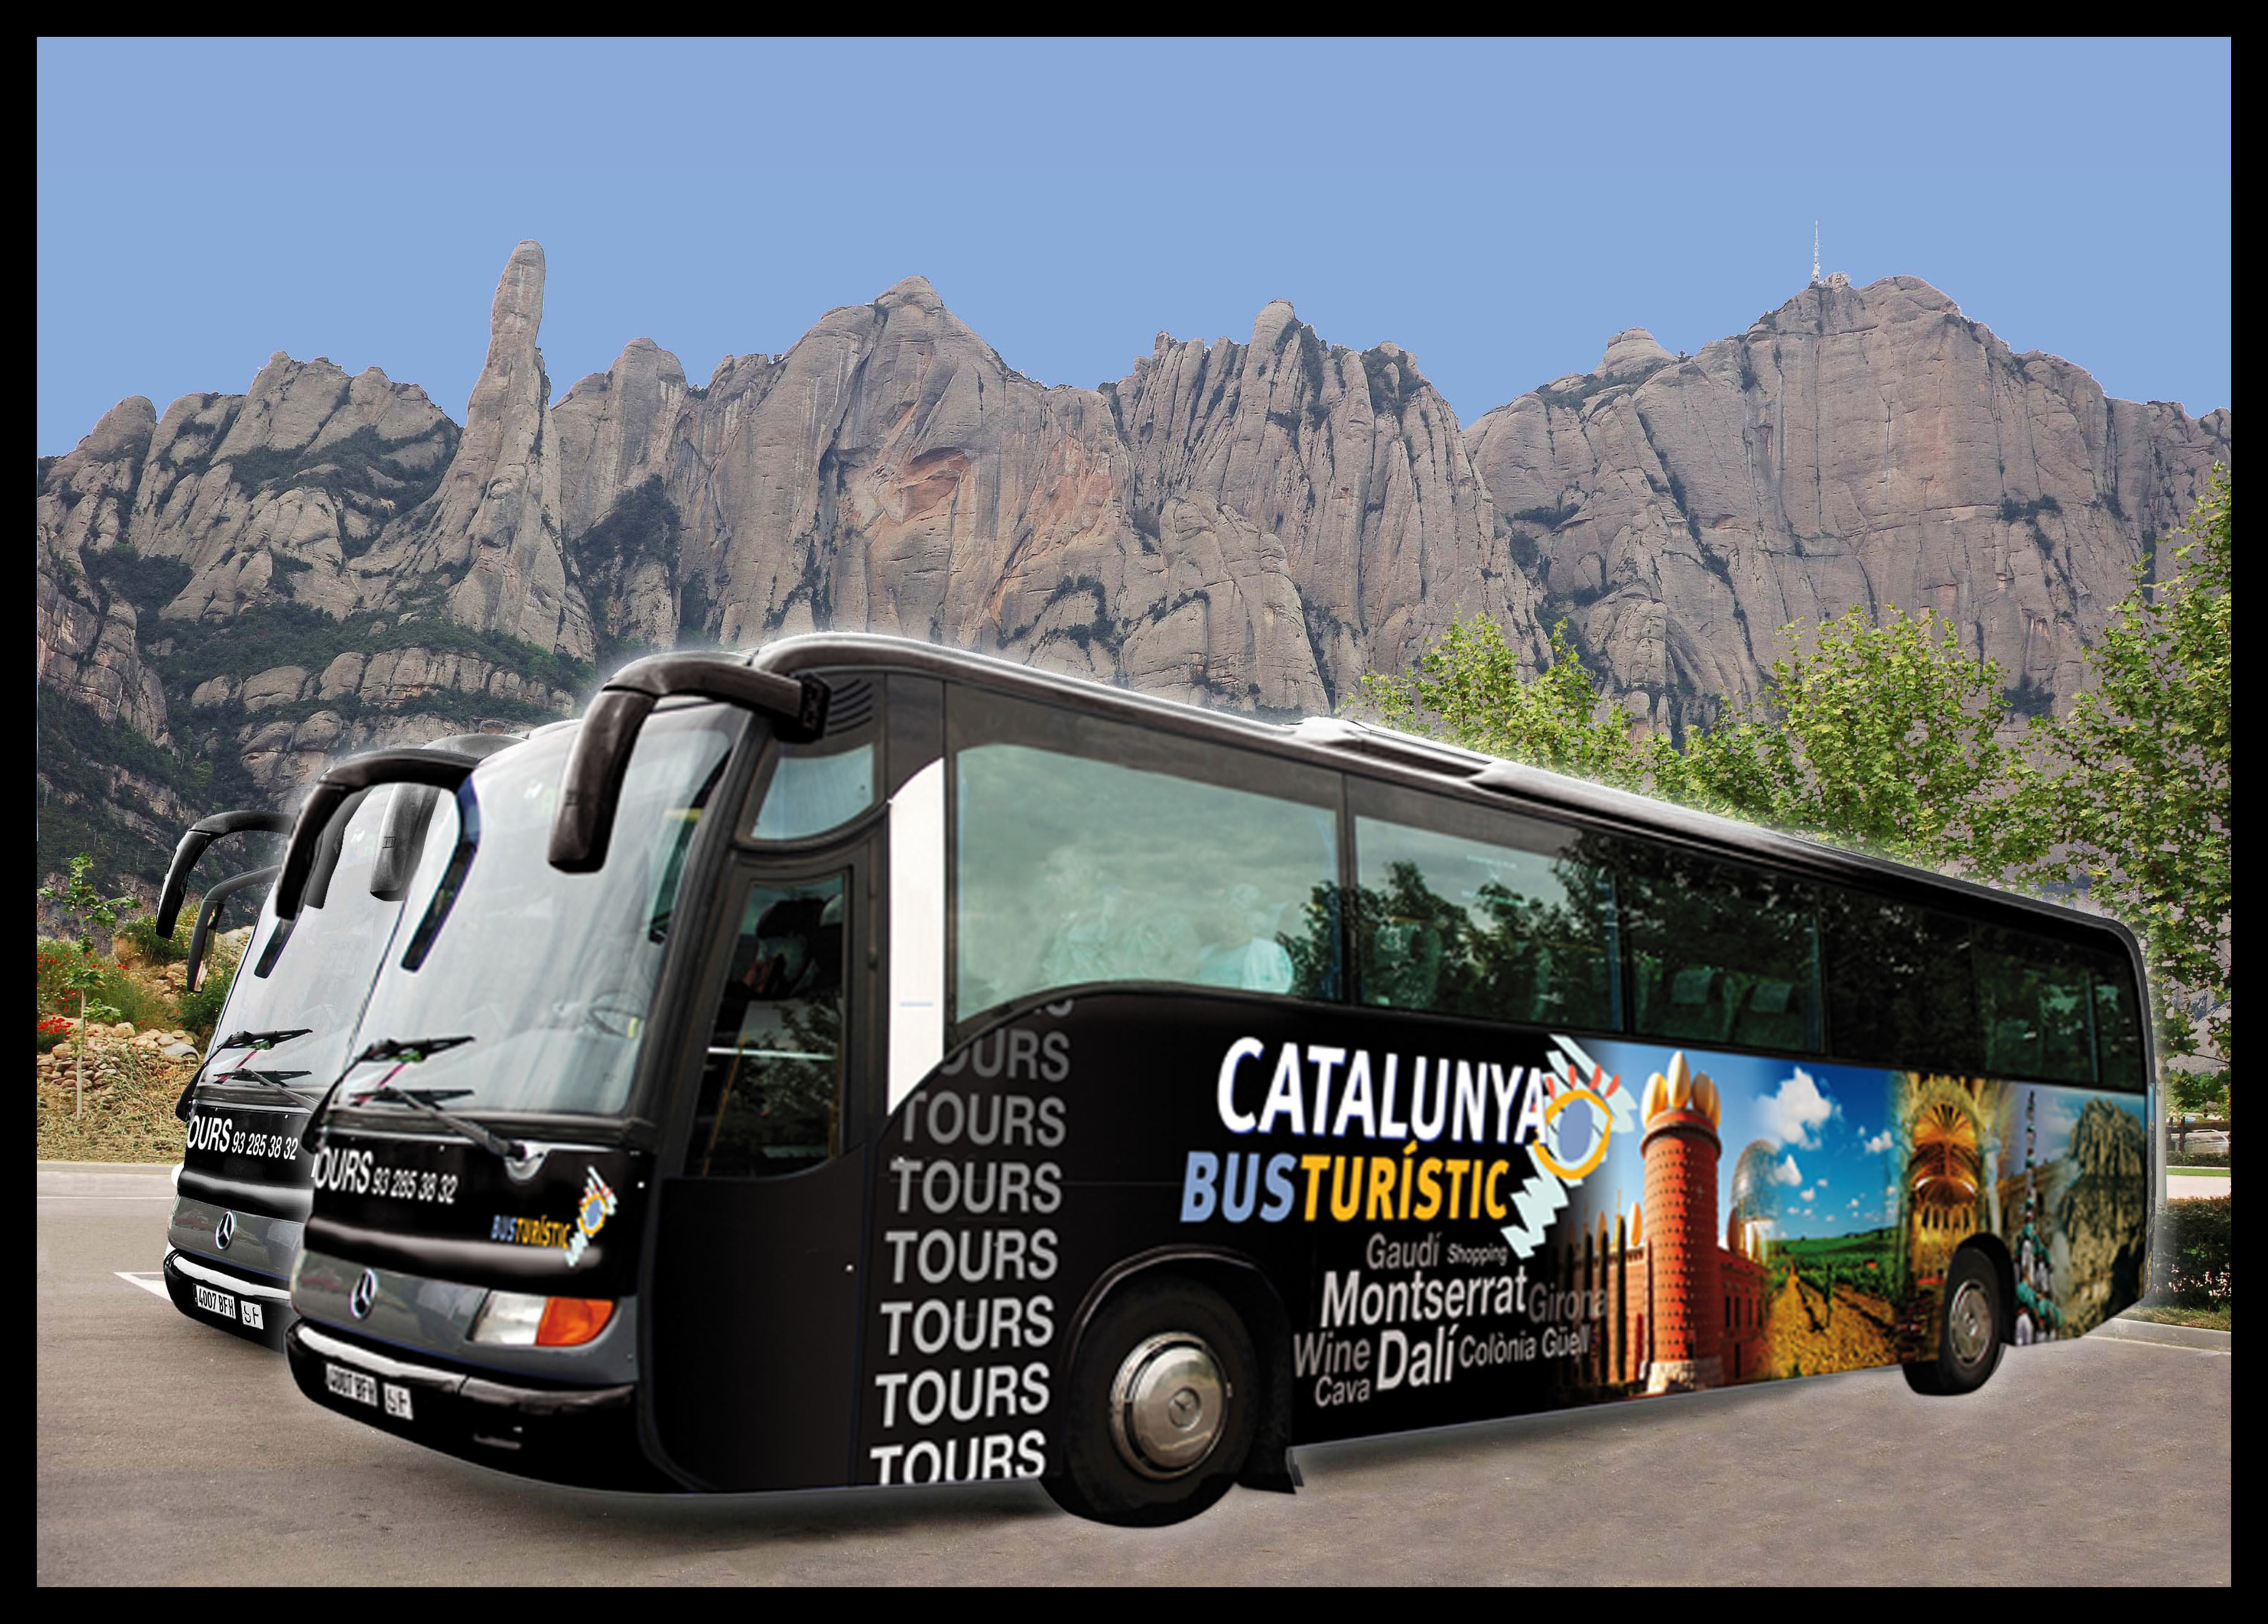 Catalunya Bus Turístic image of tour buses 